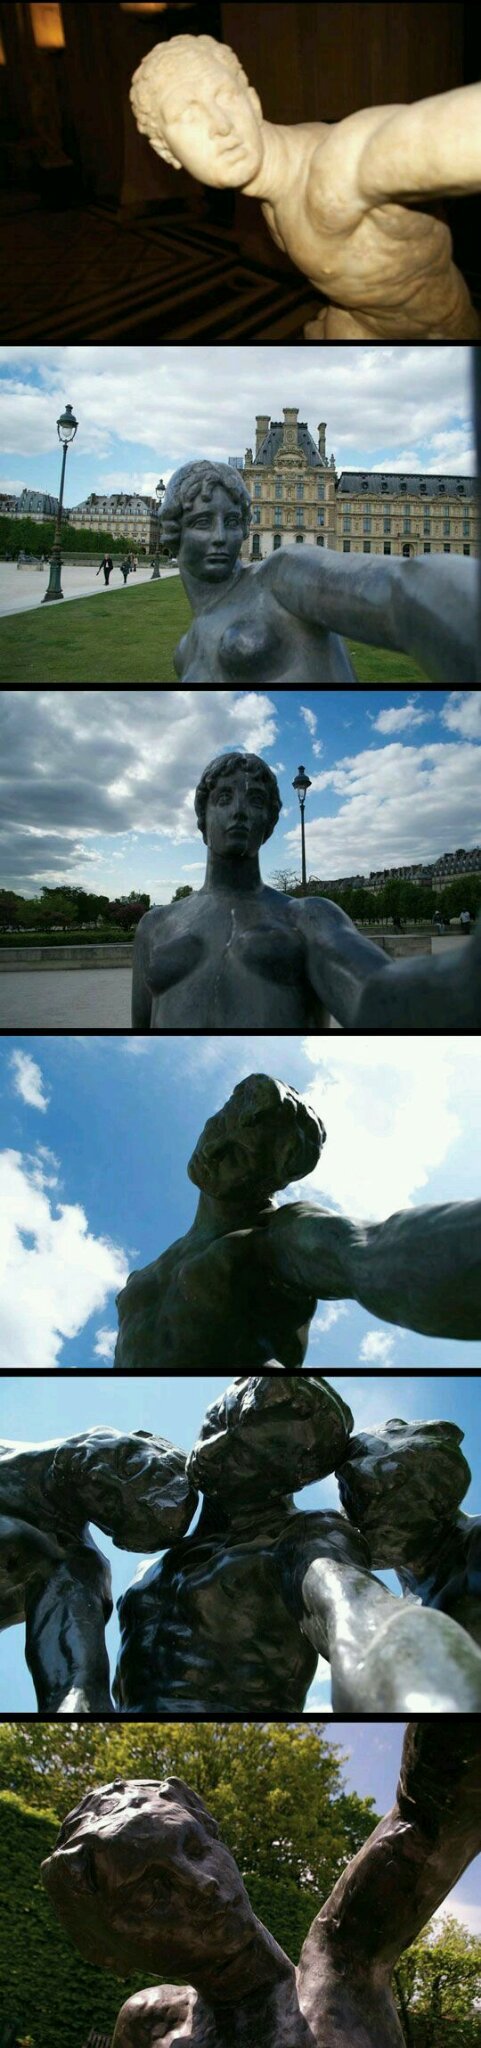 Statues taking selfies - meme